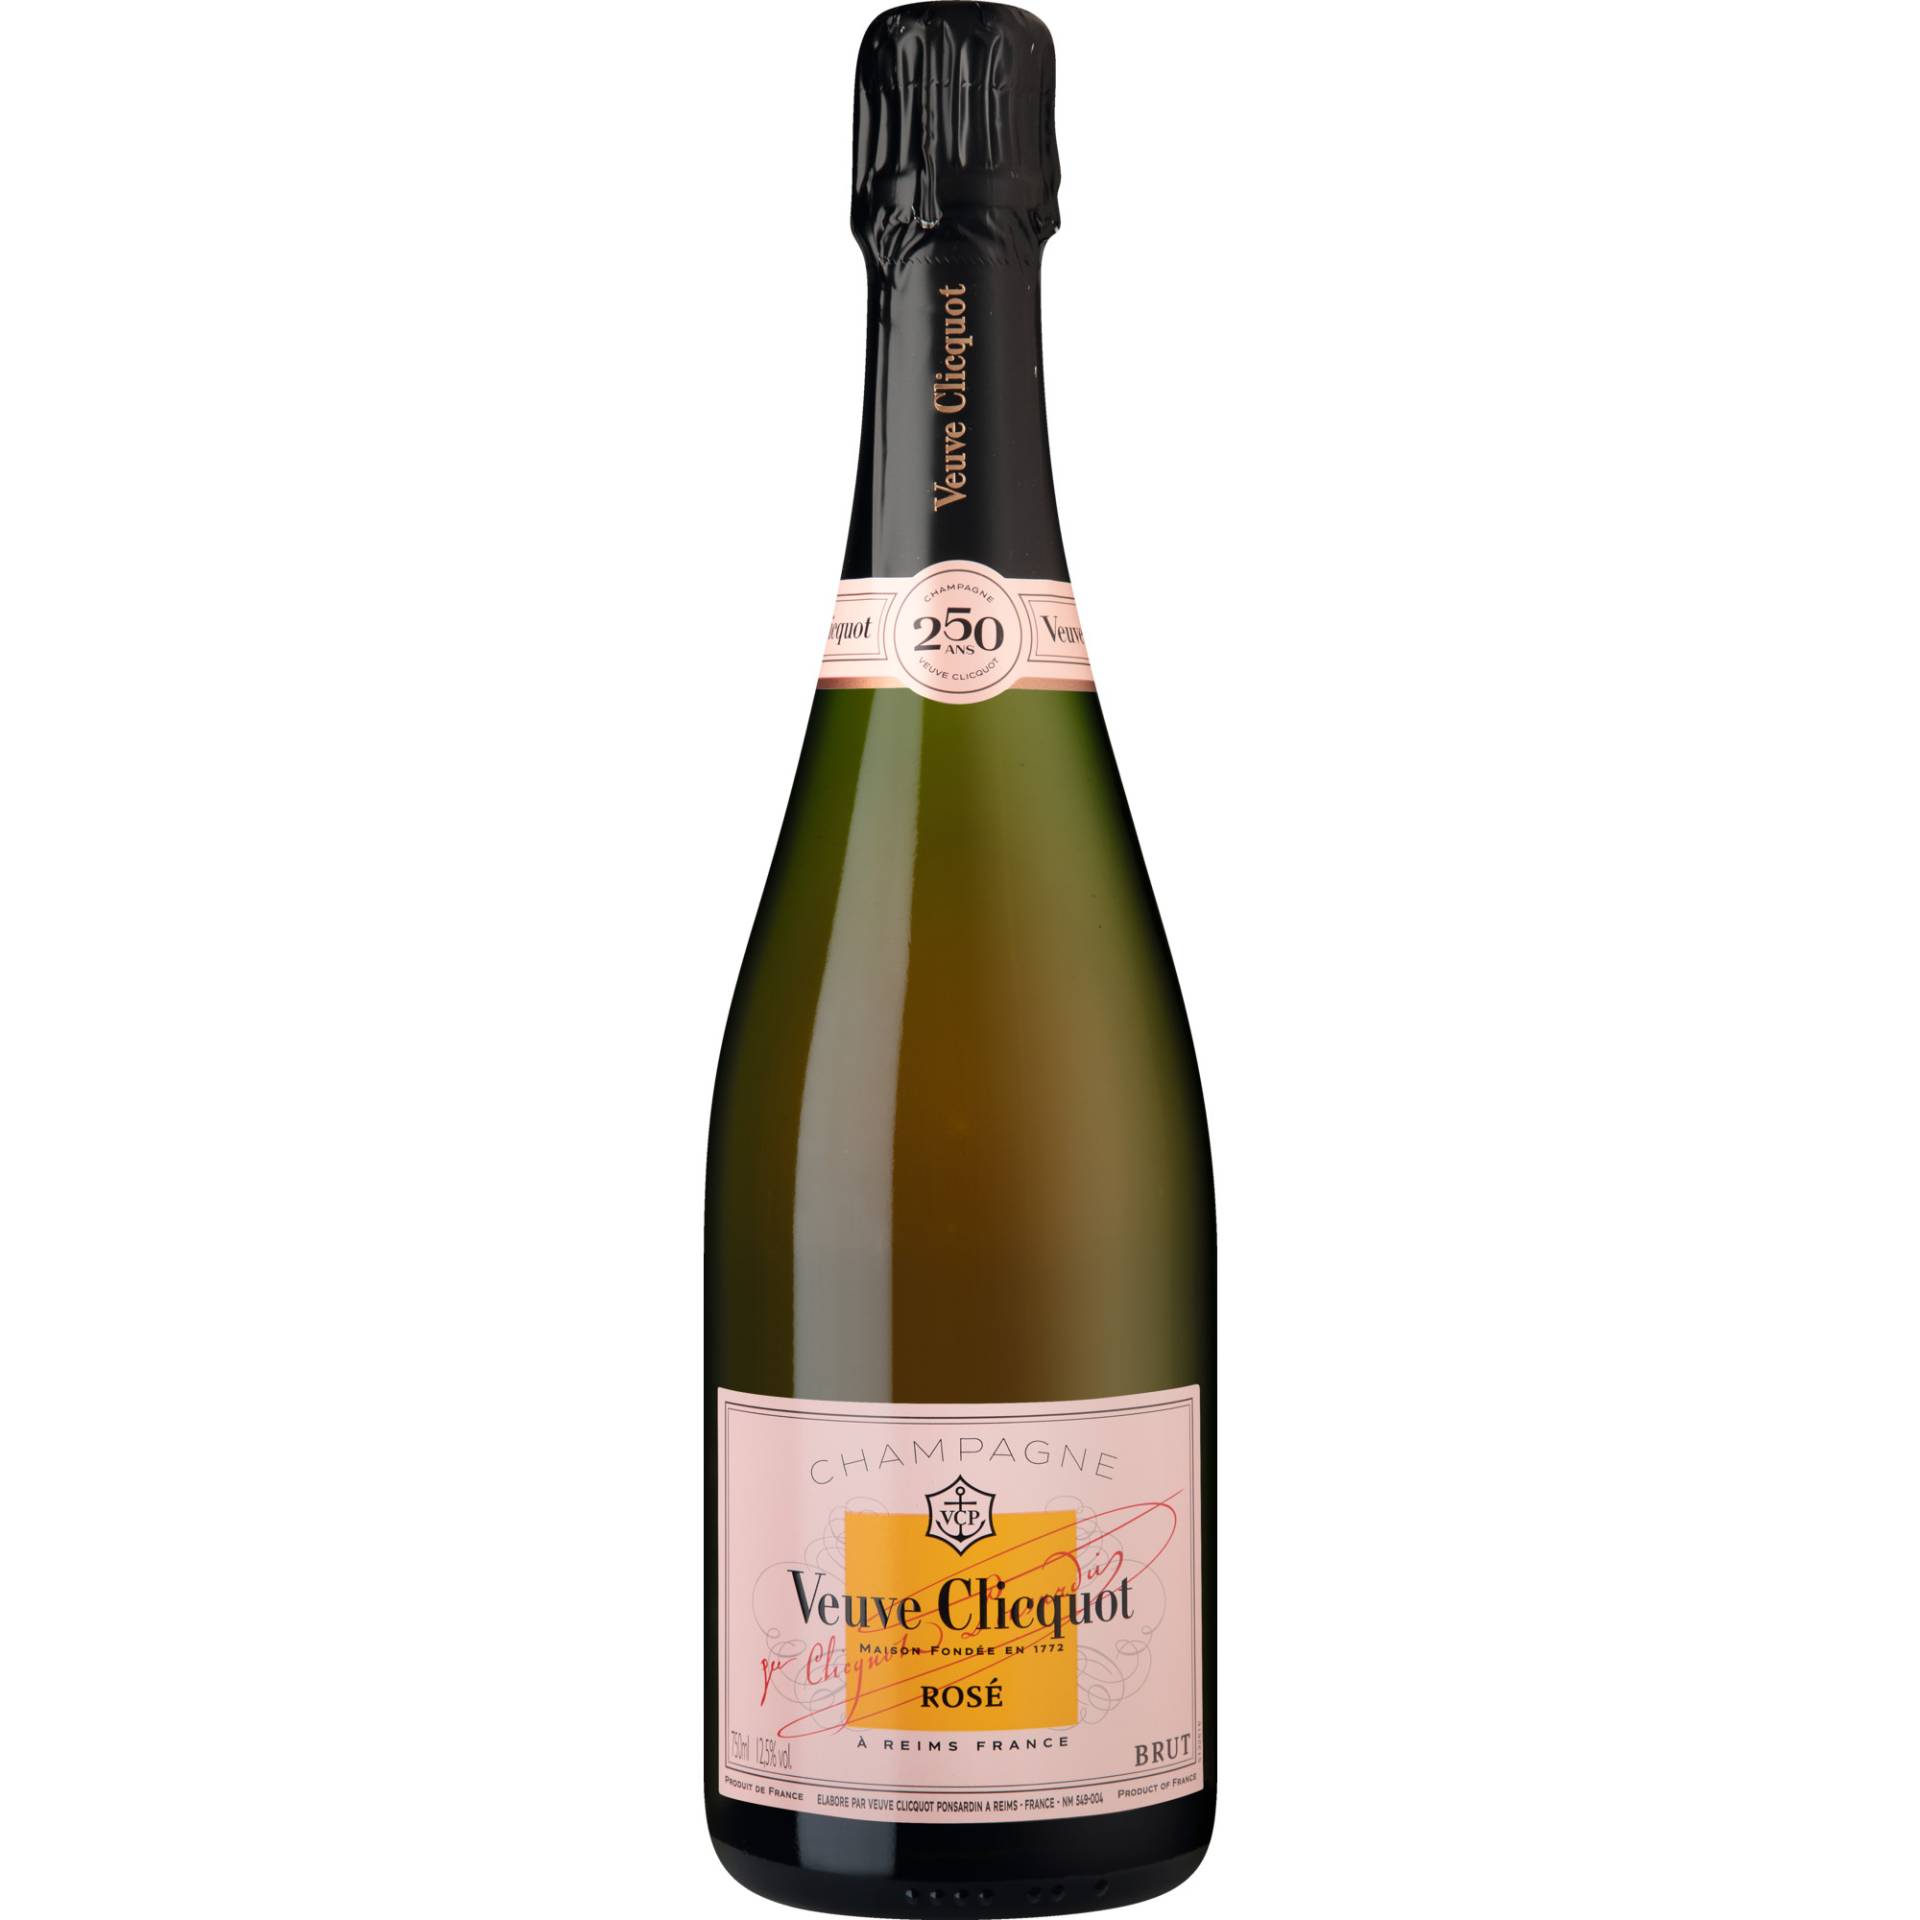 Champagne Veuve Clicquot Ponsardin Rosé, Brut, Champagne AC, Geschenketui 250 Jahre, Champagne, Schaumwein von Champagne Veuve Clicquot, Reims, France